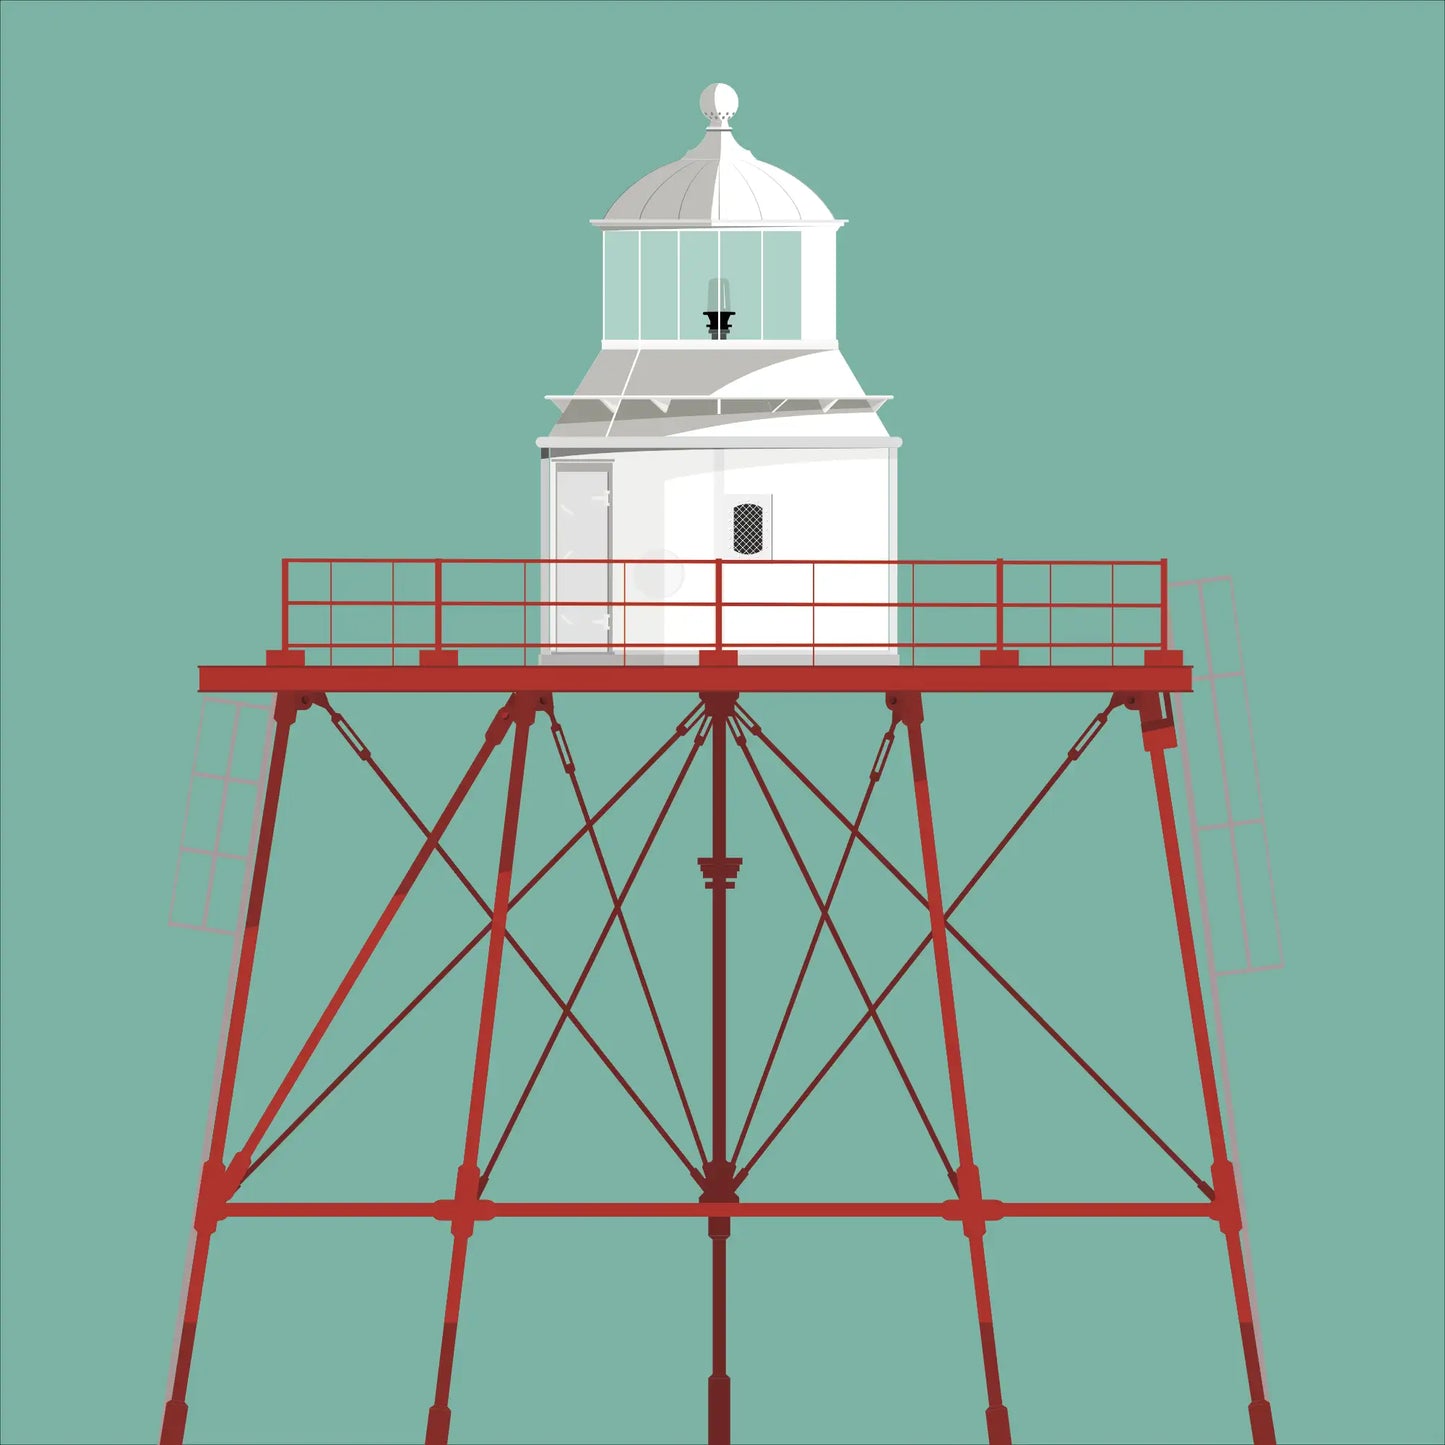 Illustration of Spitbank lighthouse on a white background inside light blue square.